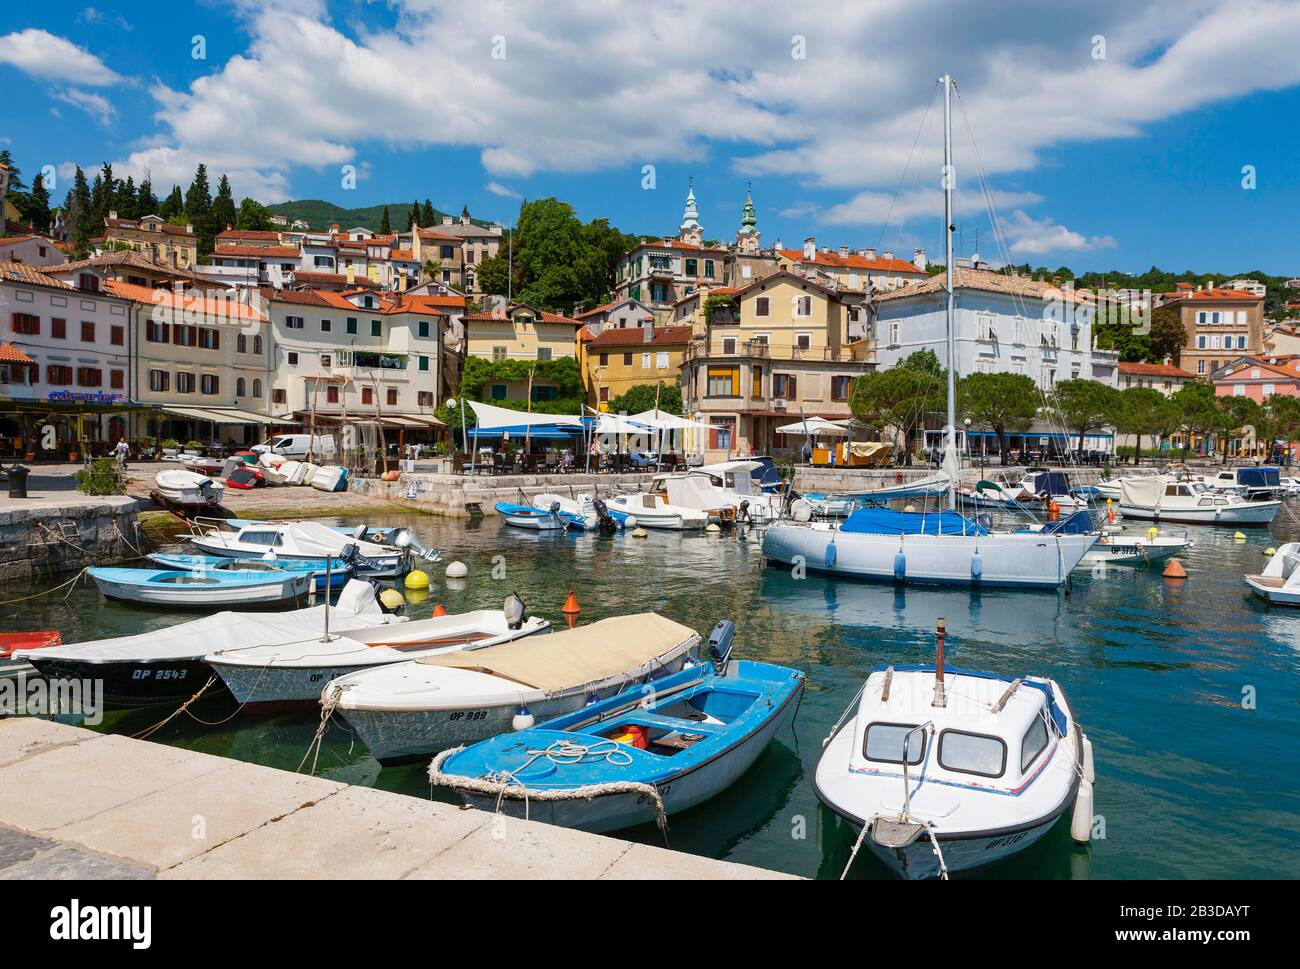 Port and village view, Volosko near Opatija, Istria, Kvarner Gulf Bay, Croatian Adriatic Sea, Croatia Stock Photo